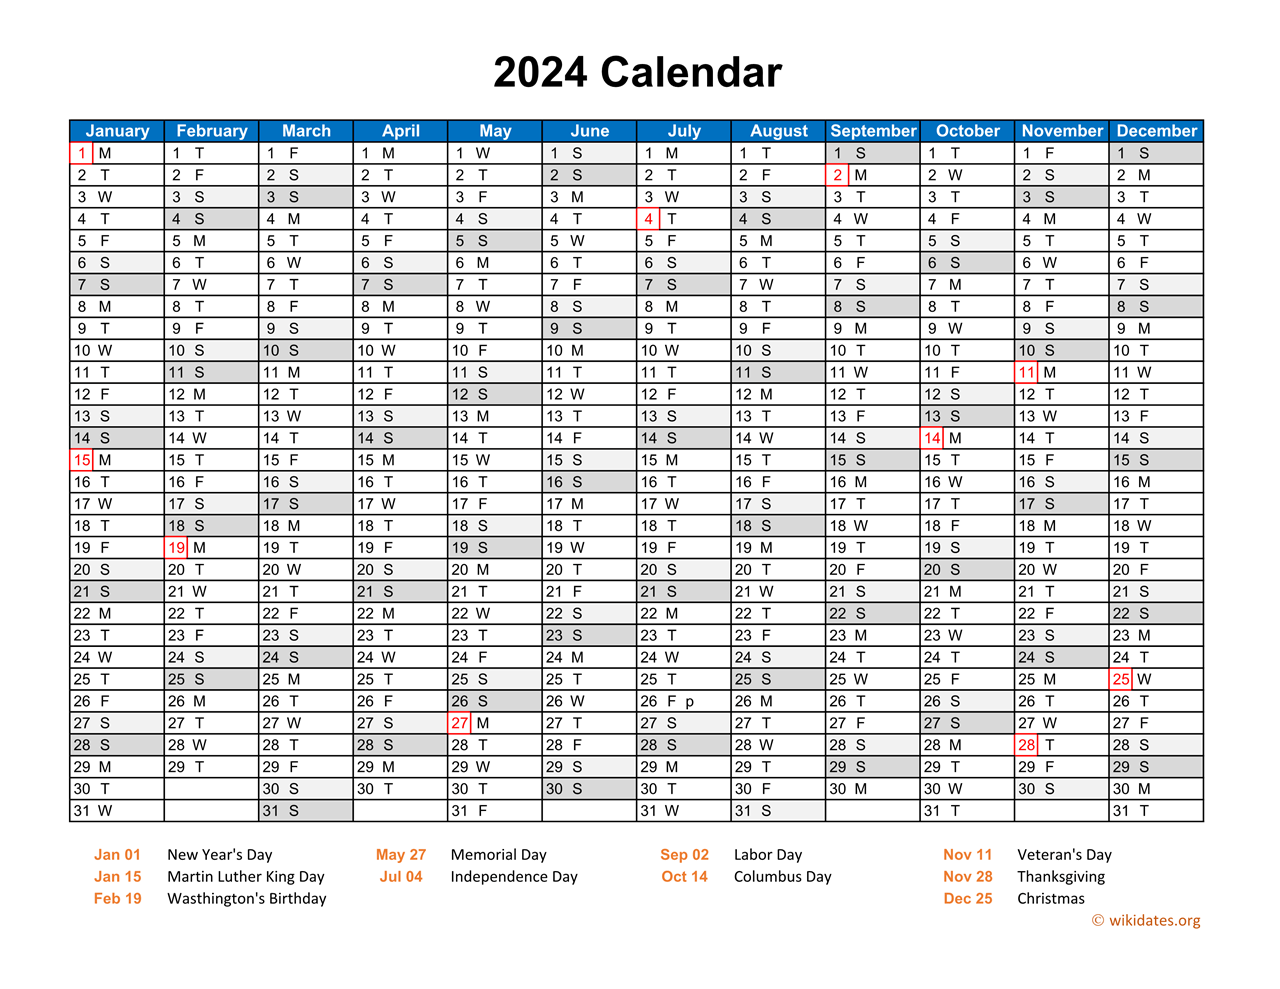 2024 Calendar Template 08 